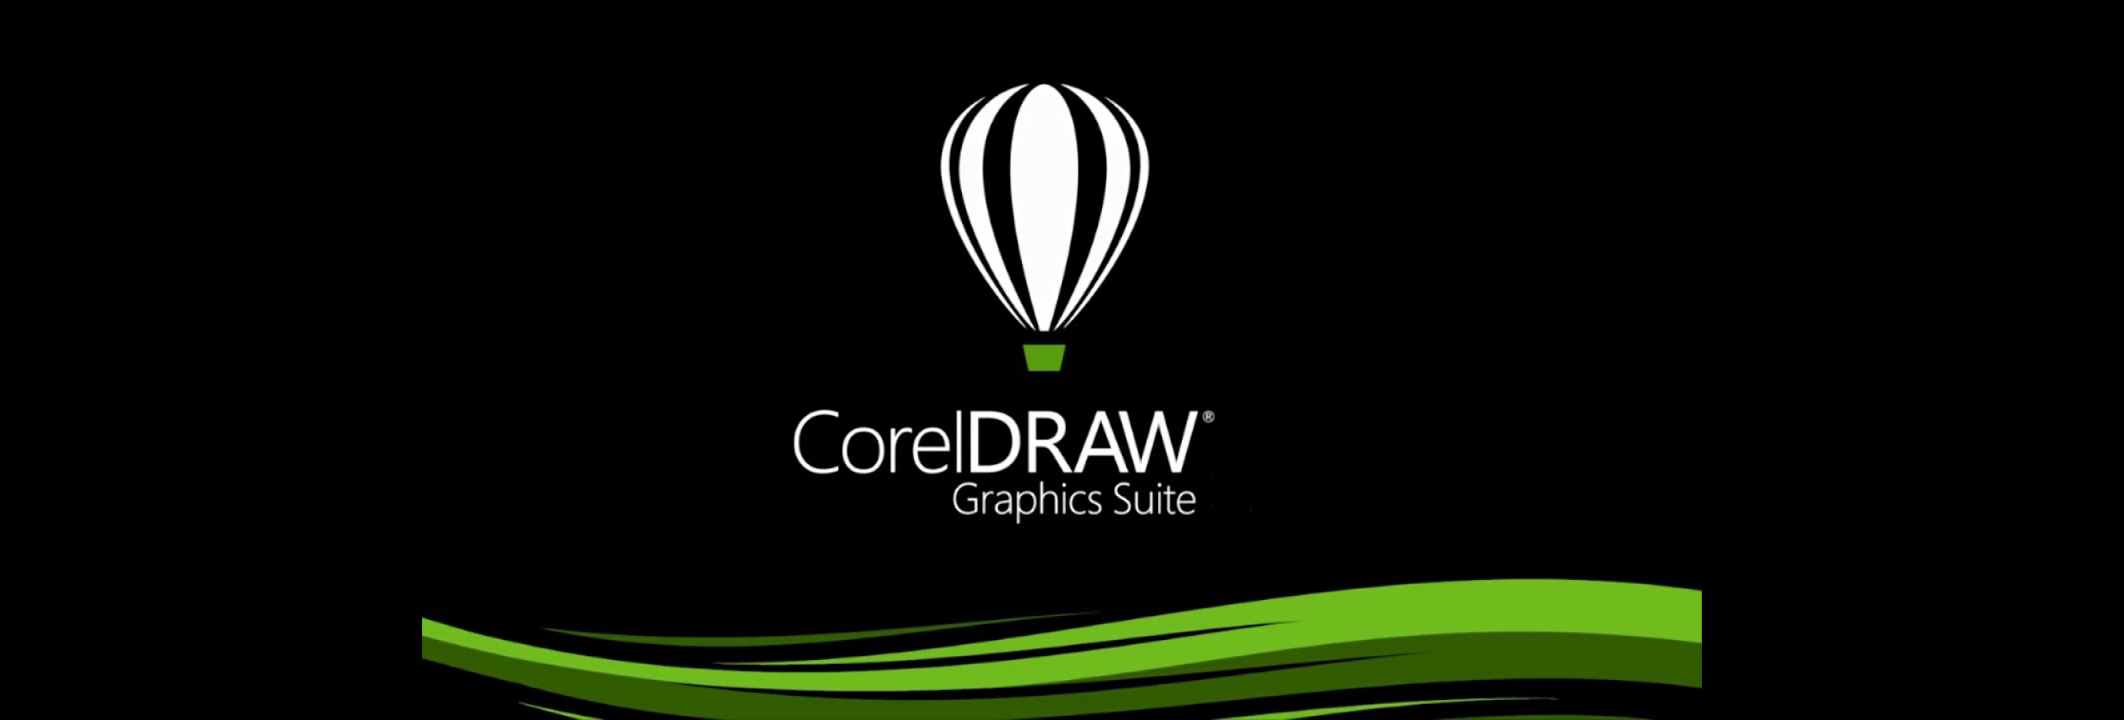 En Grupo Deco comercializamos la licencia completa para CorelDRAW X8 en todo México - México